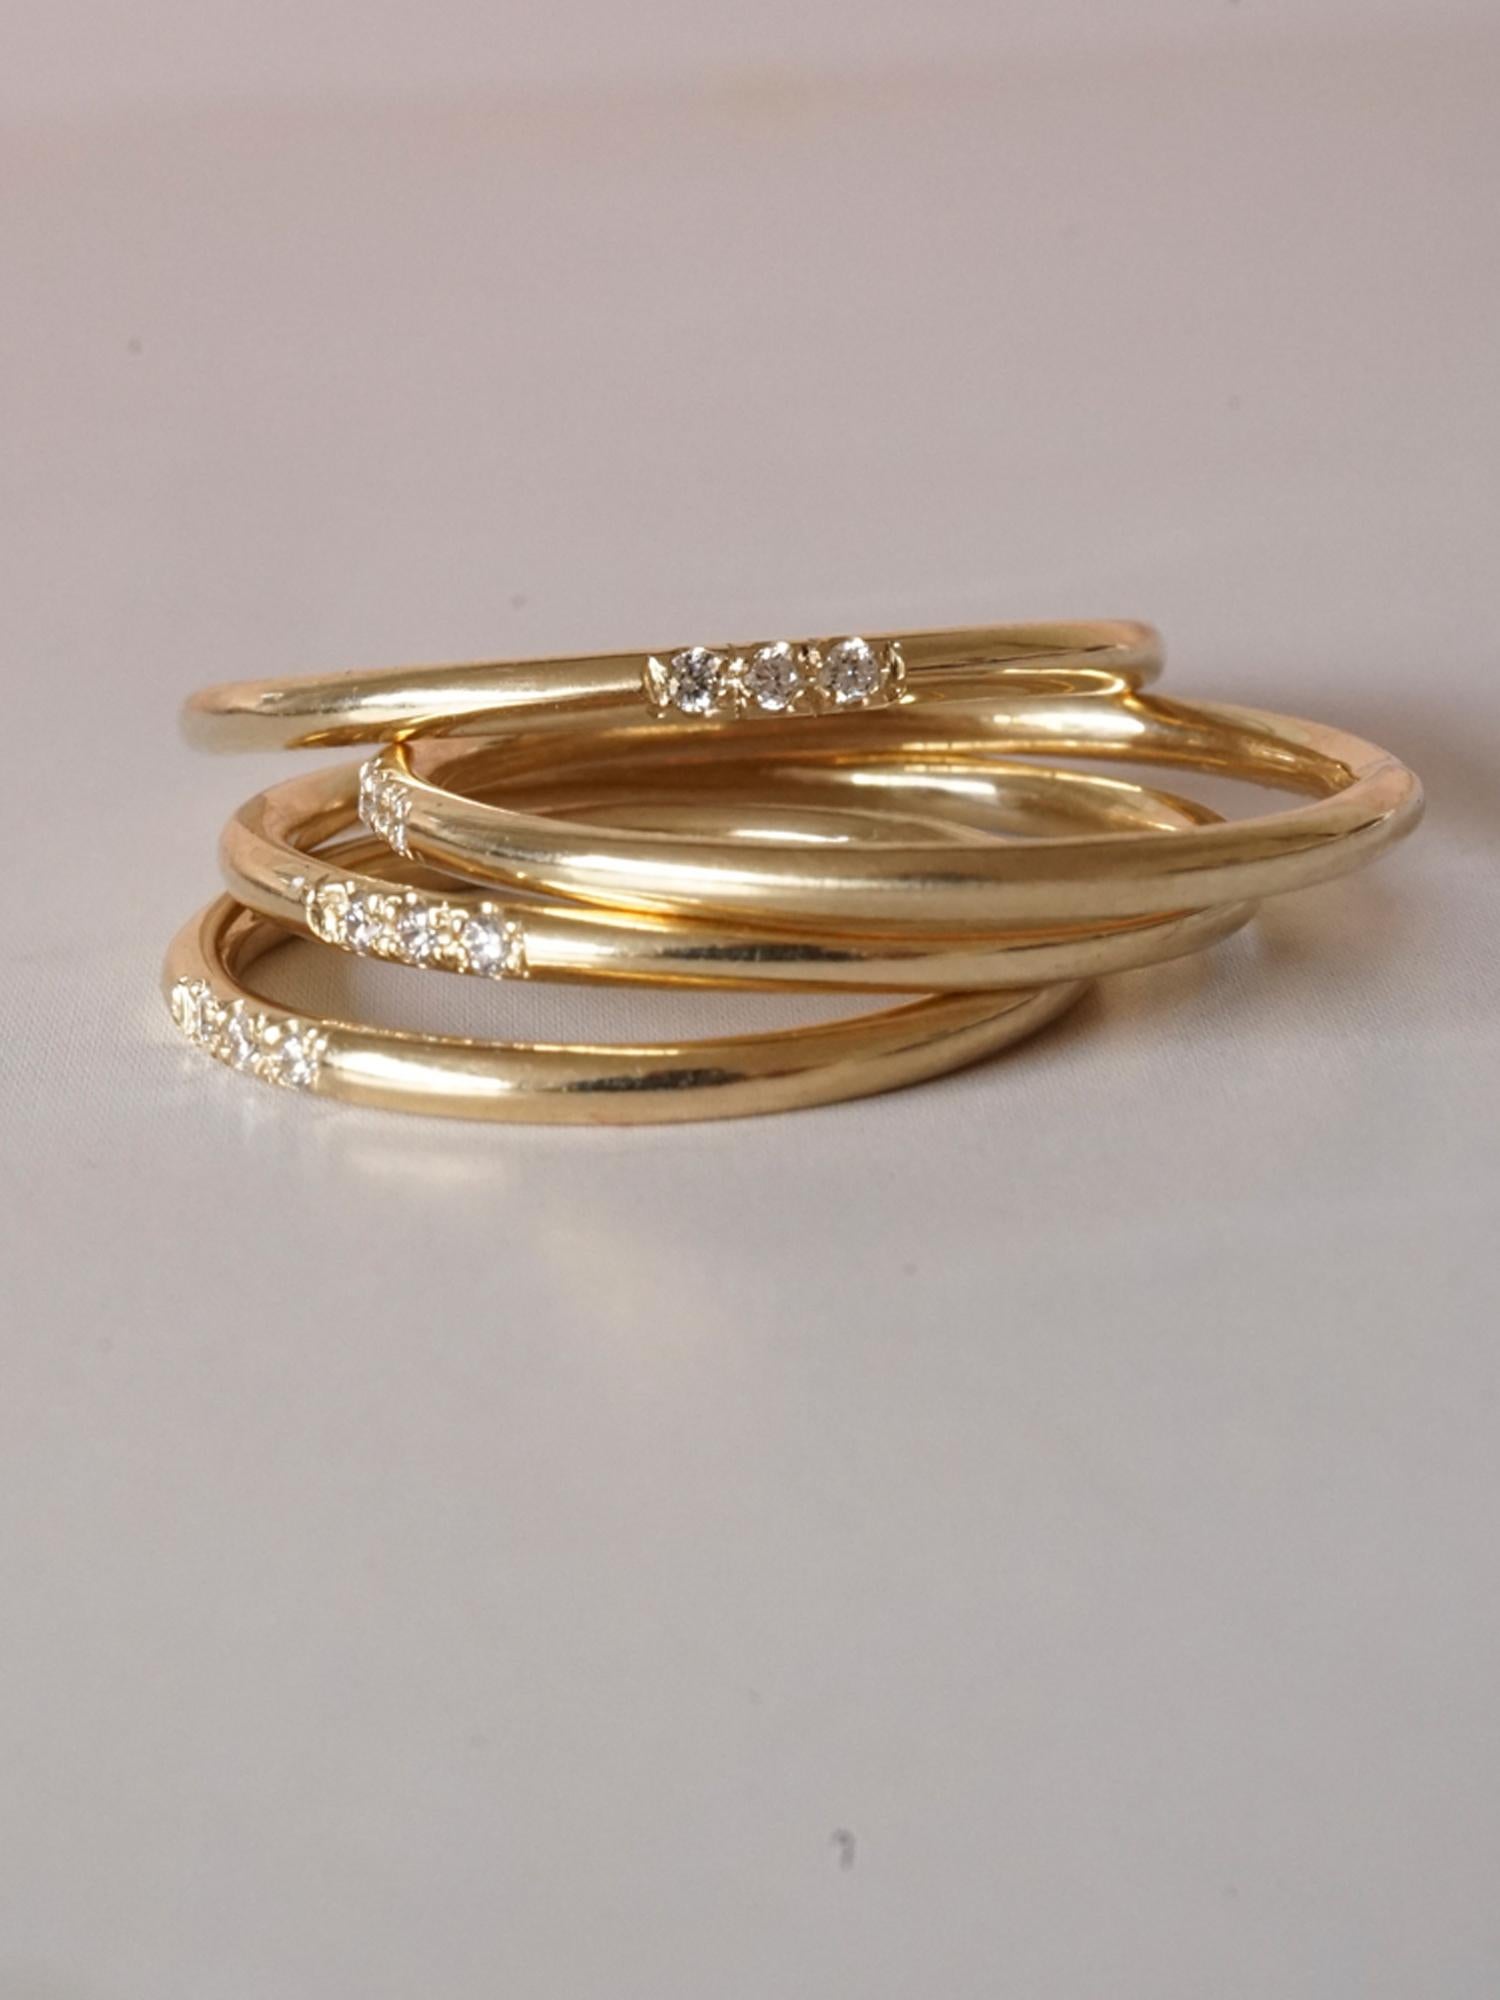 For Sale:  14 Karat Gold Diamond Trio Minimalist Band Ring by Mon Pilar sizes 11-12 US 3